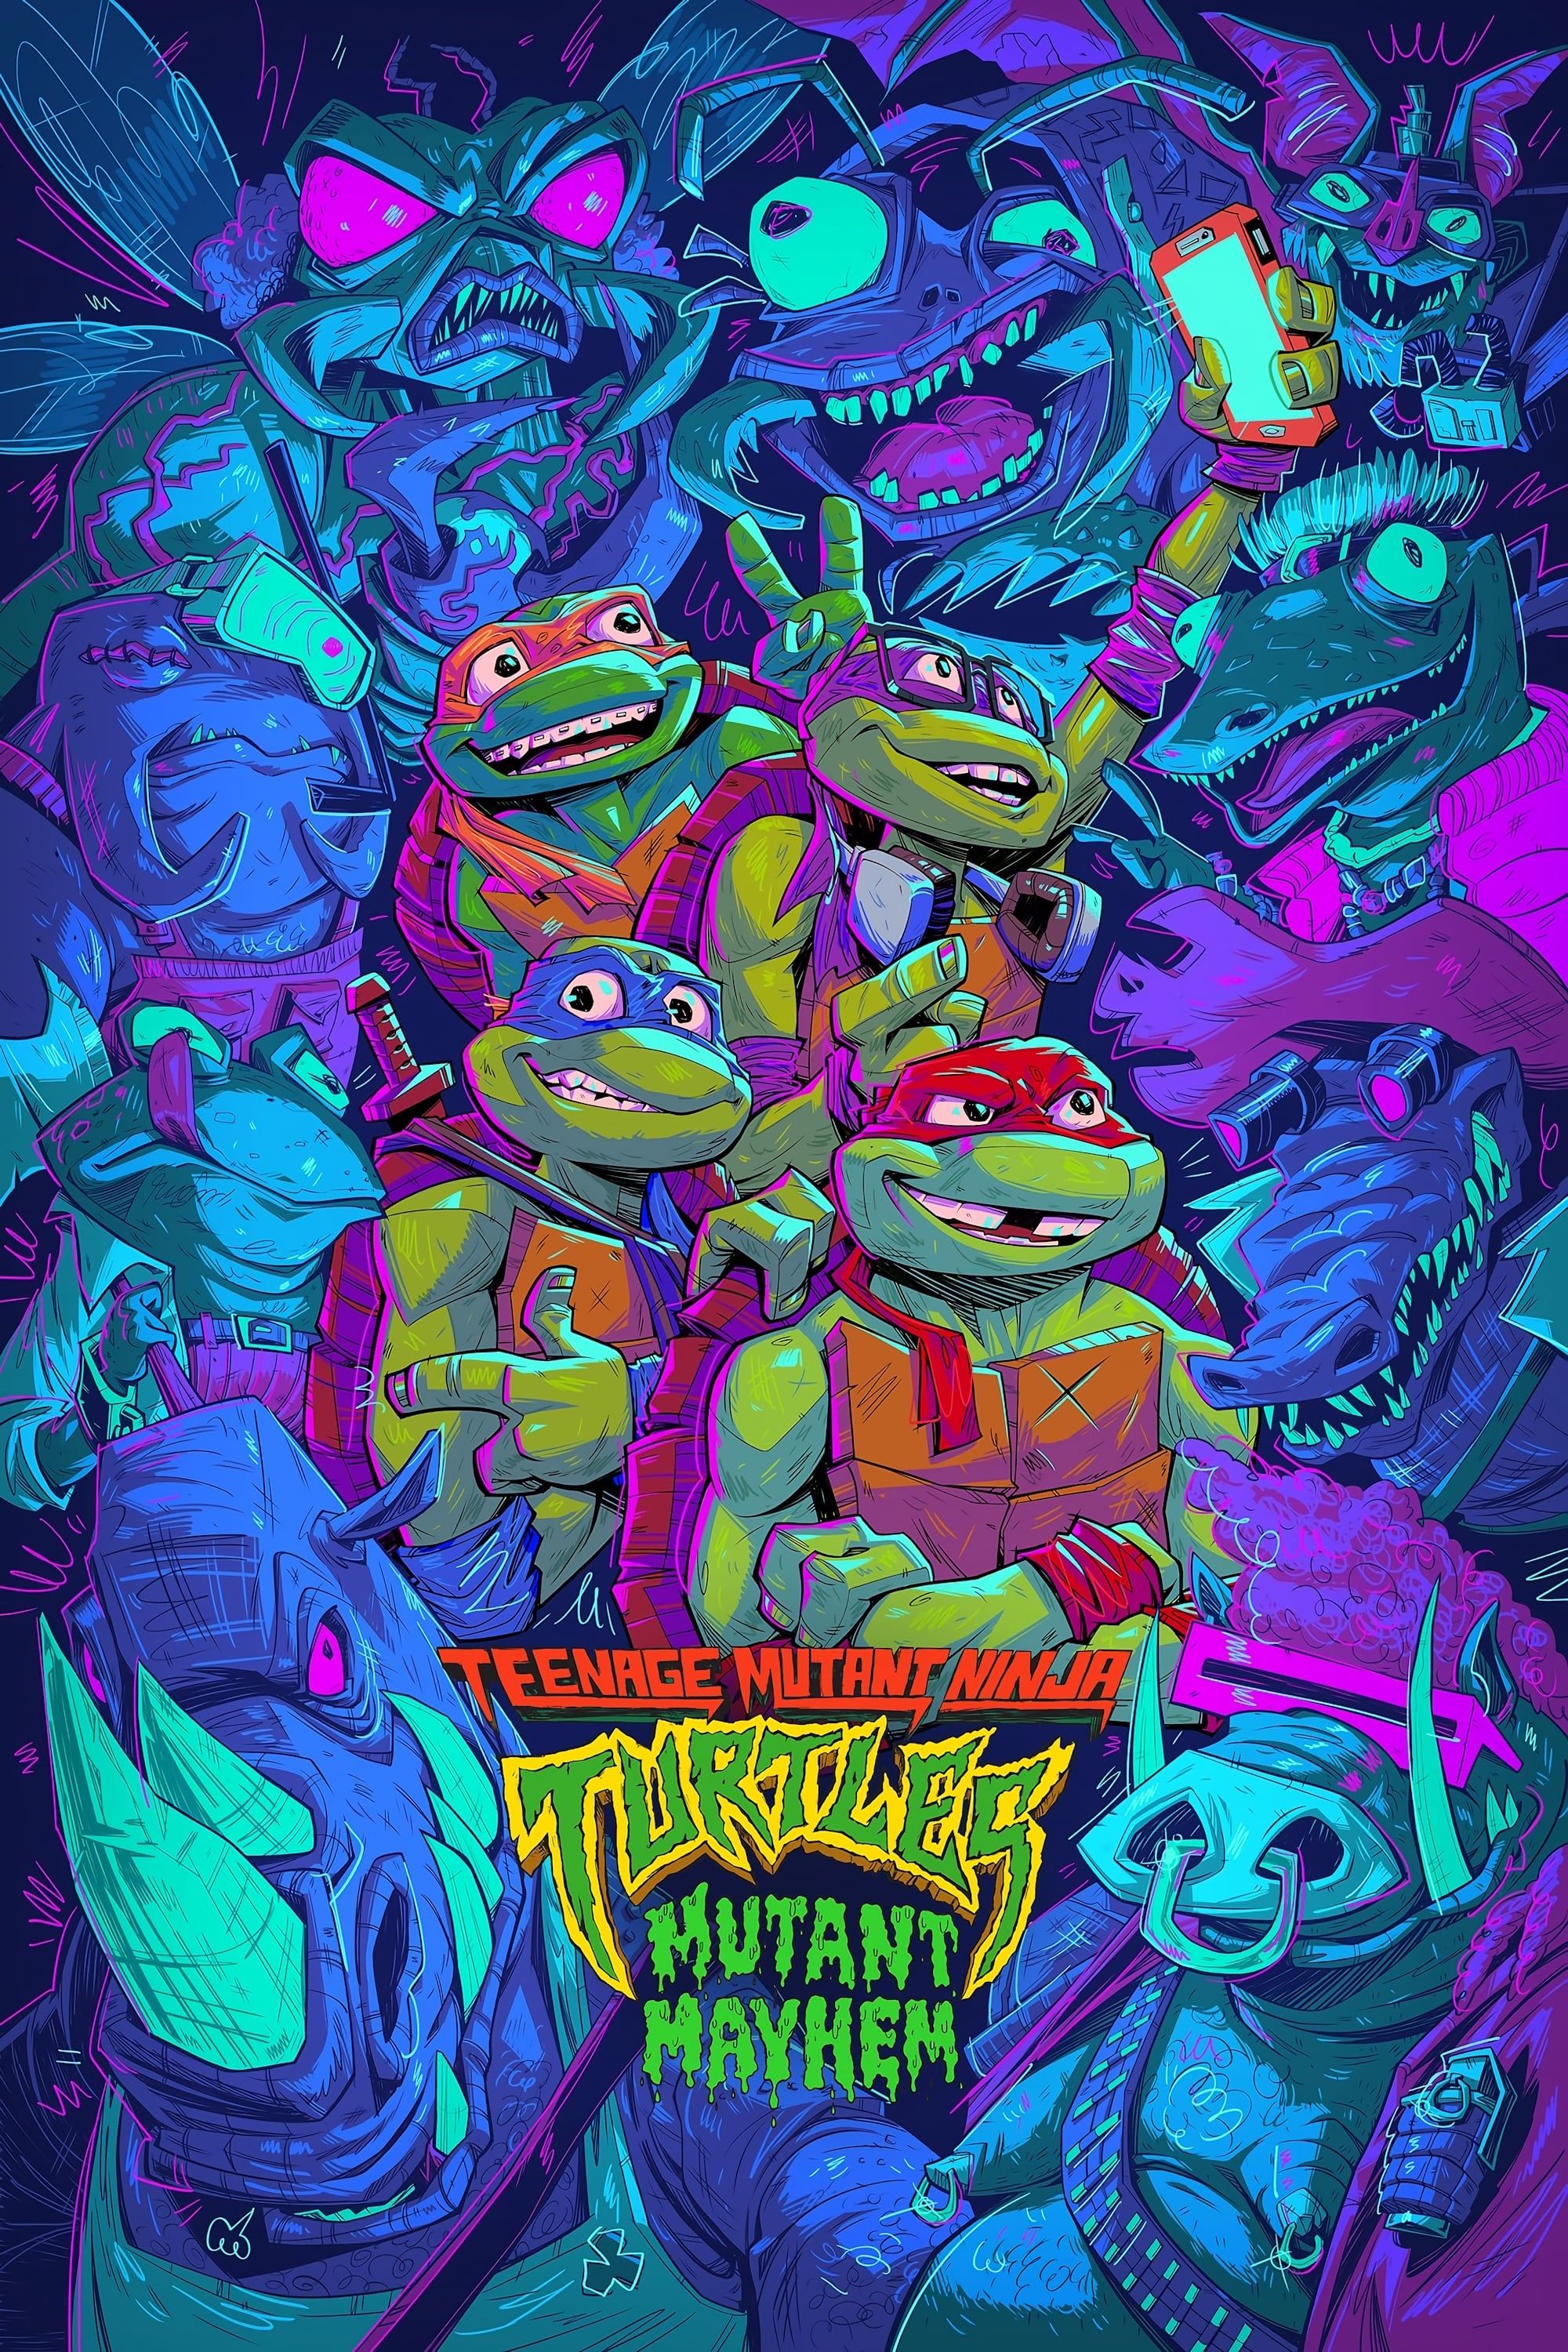 Teenage Mutant Ninja Turtles- Mutant Mayhem Poster Featuring Michelangelo, Leonardo, Raphael, and Donatello Surrounded by Neon Mutant Creatures